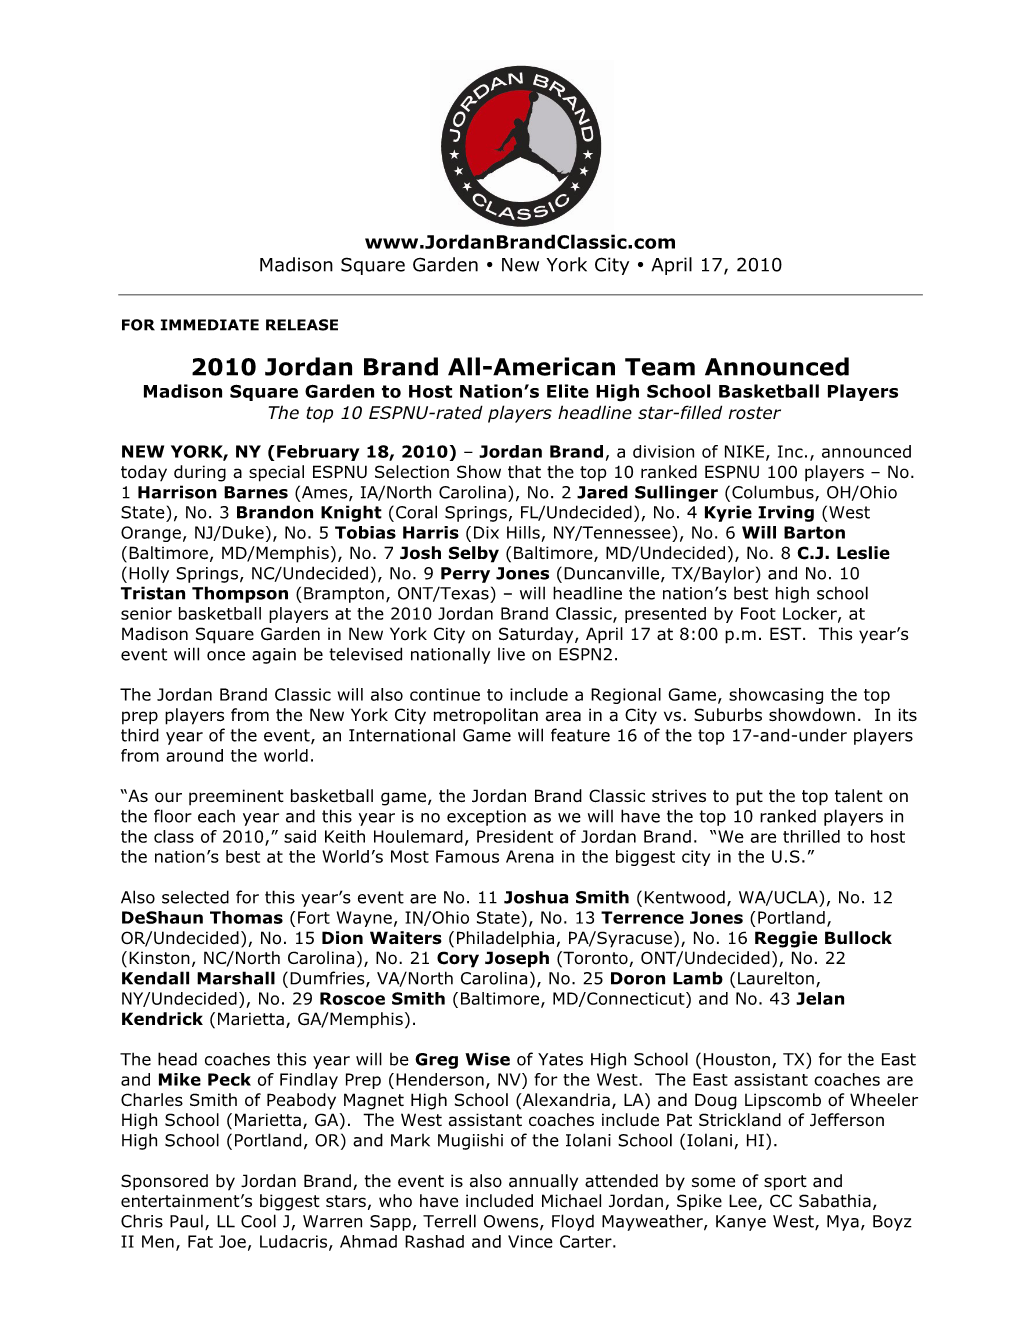 2010 Jordan Brand All-American Team Announced